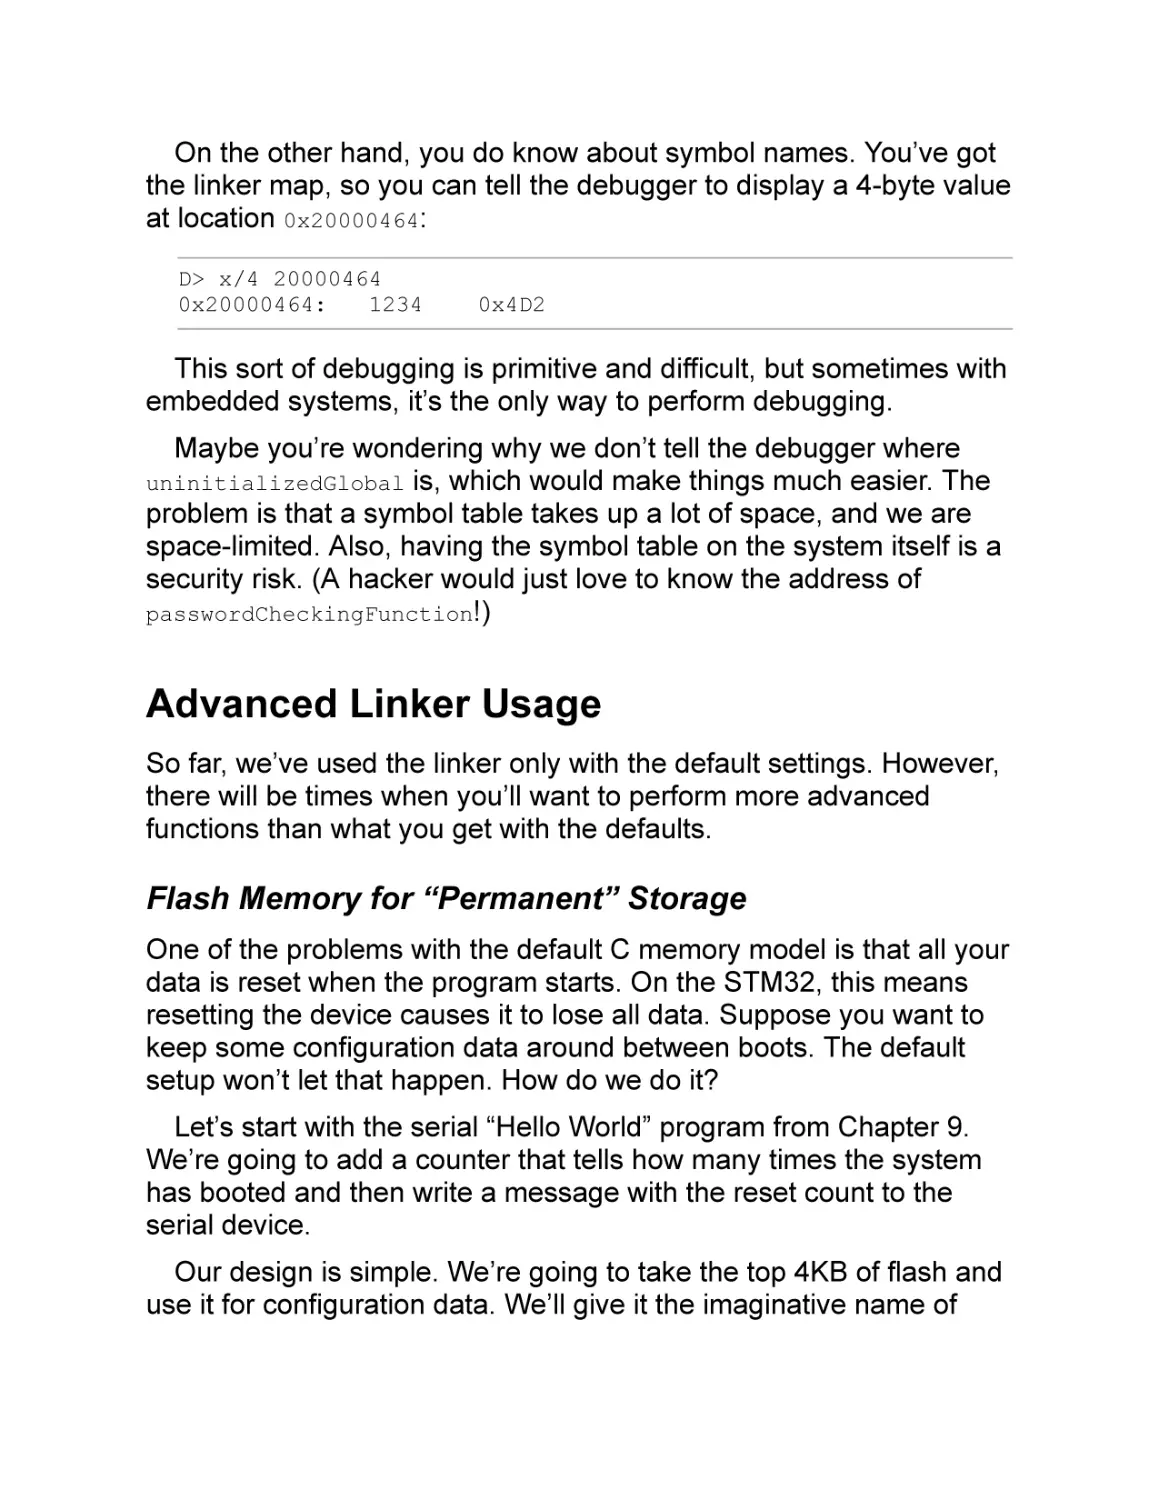 Advanced Linker Usage
Flash Memory for “Permanent” Storage